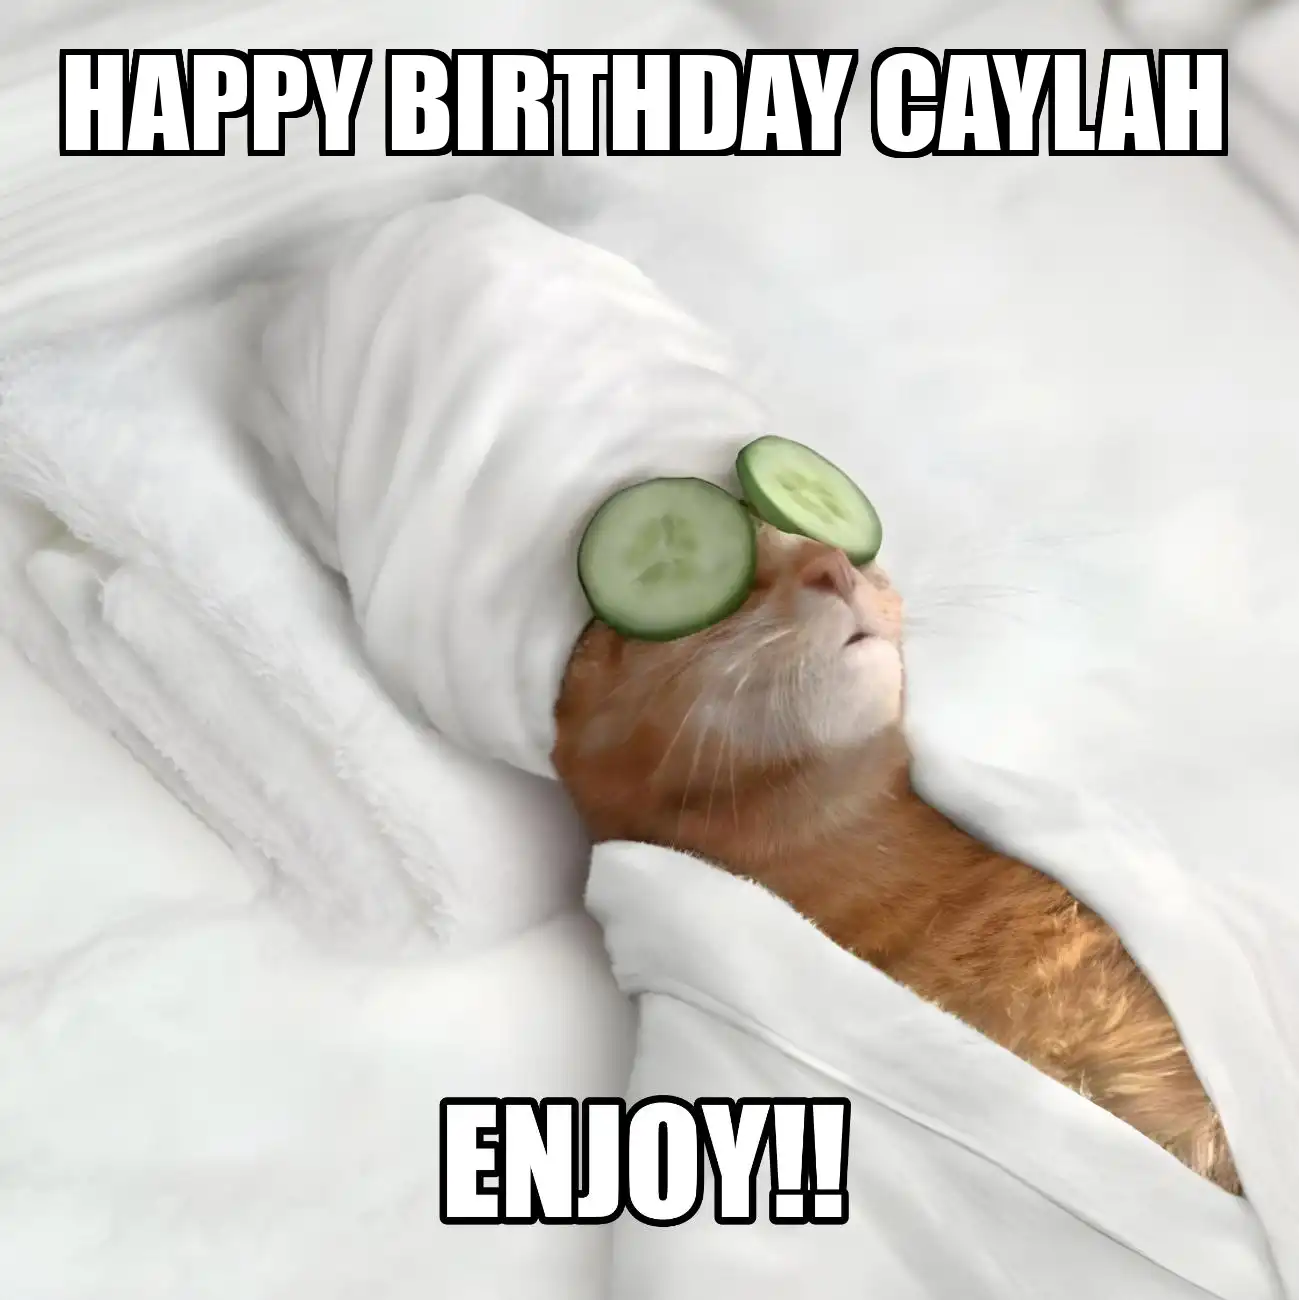 Happy Birthday Caylah Enjoy Cat Meme